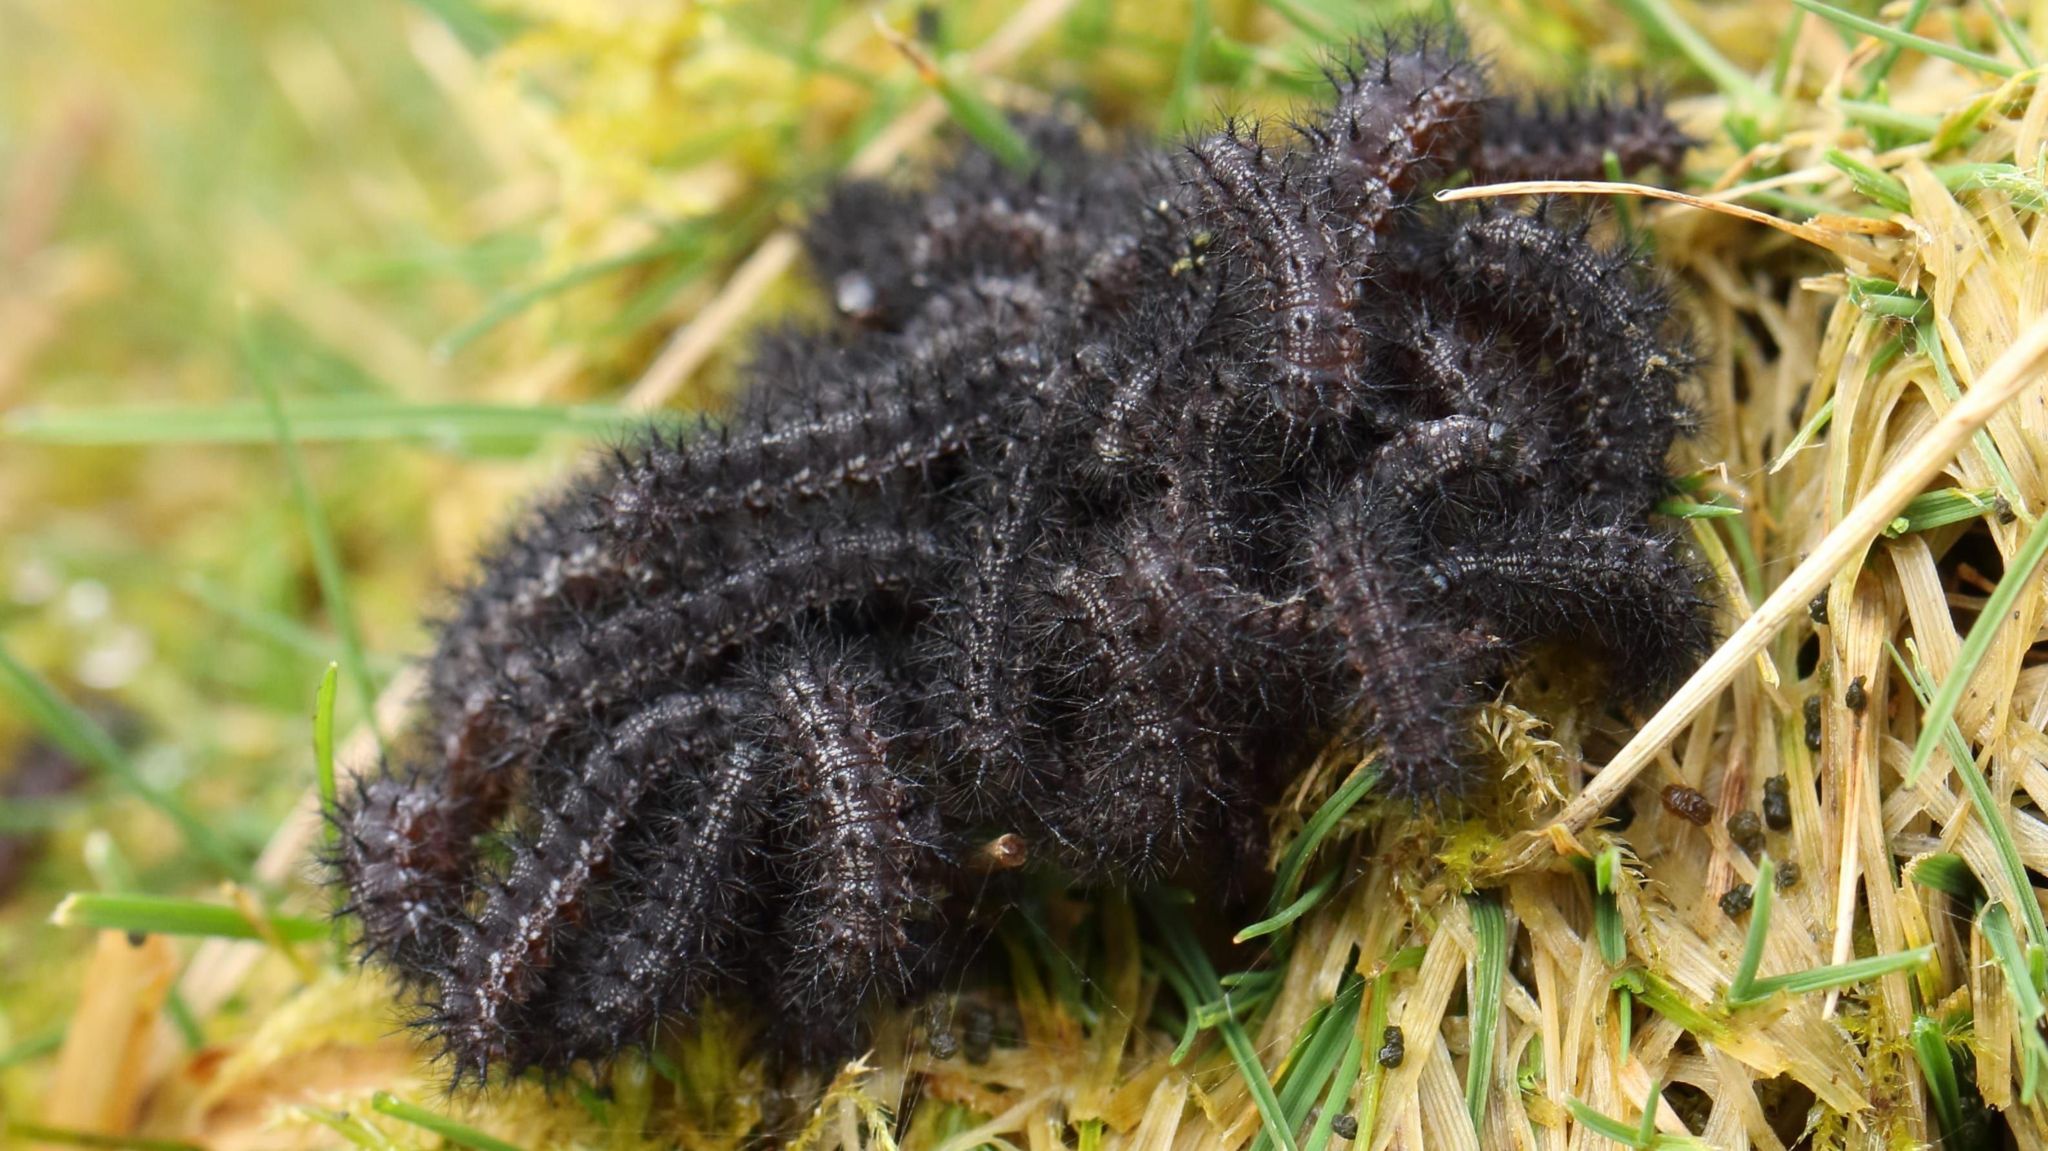 Welsh fritillary larvae